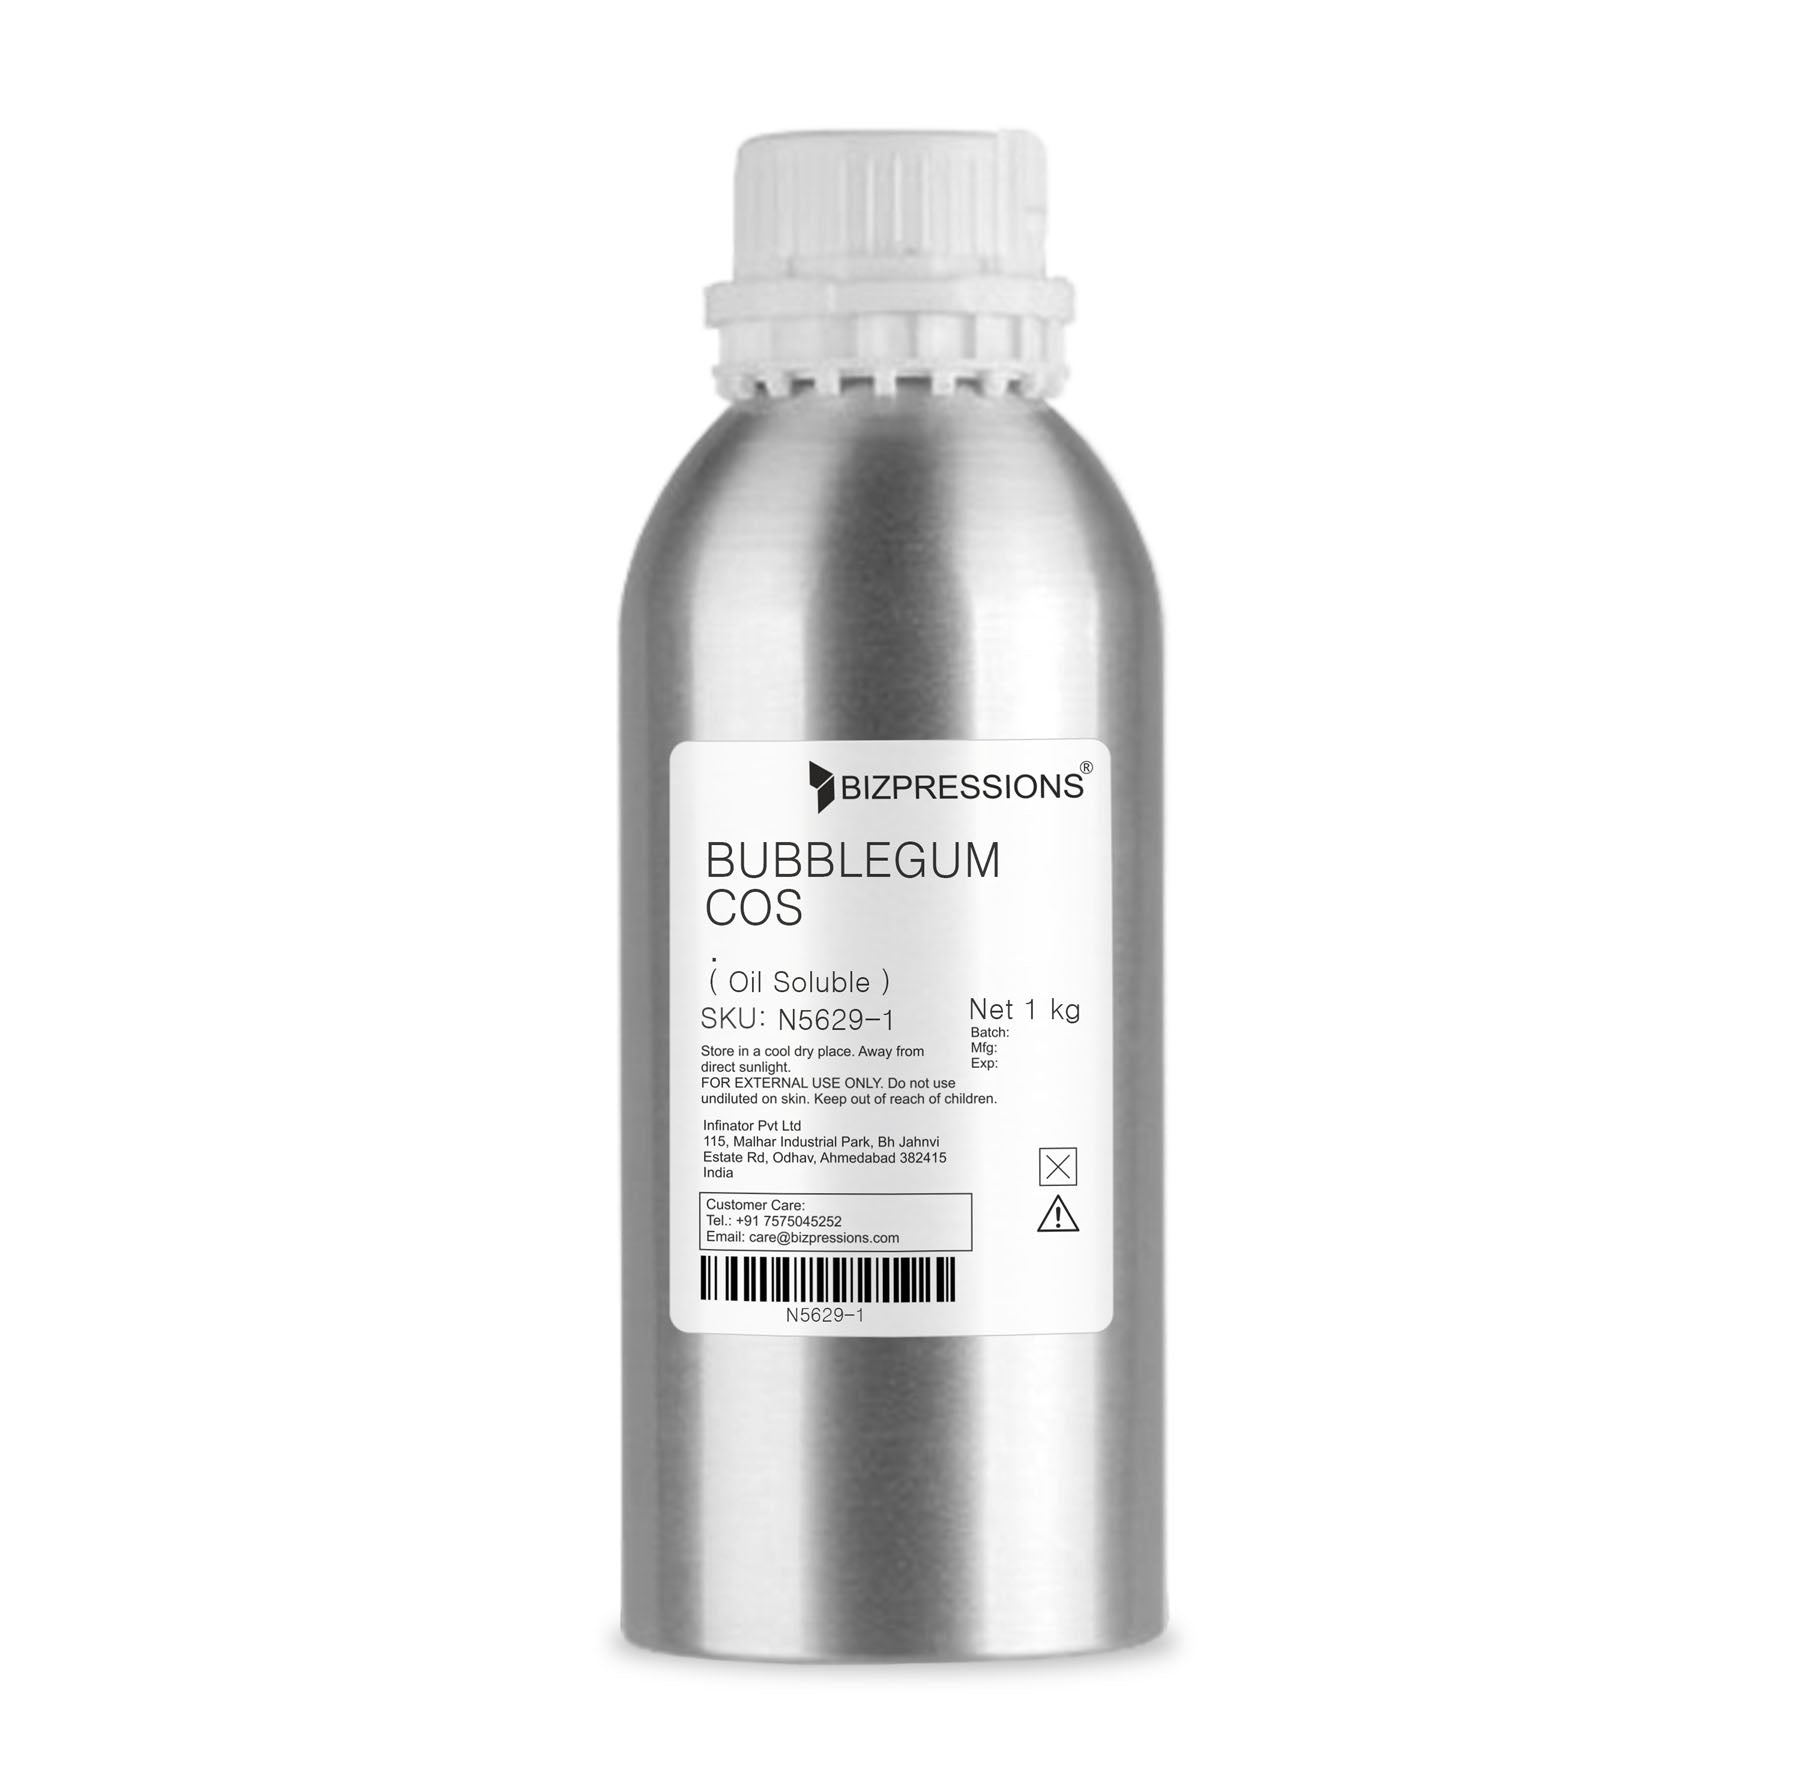 BUBBLEGUM COS - Fragrance ( Oil Soluble ) - 1 kg